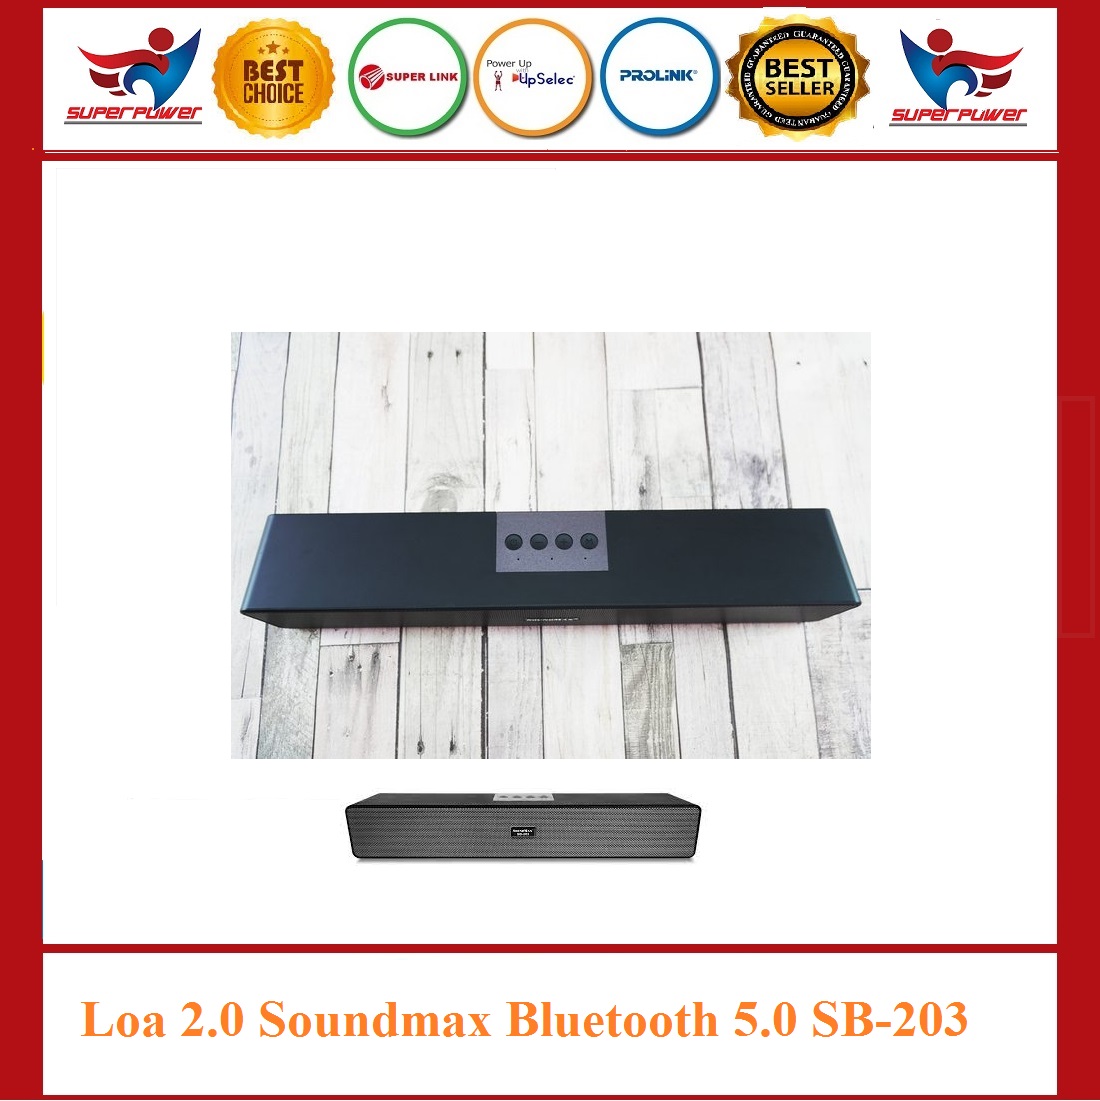 Loa 2.0 Soundmax Bluetooth 5.0 SB-203